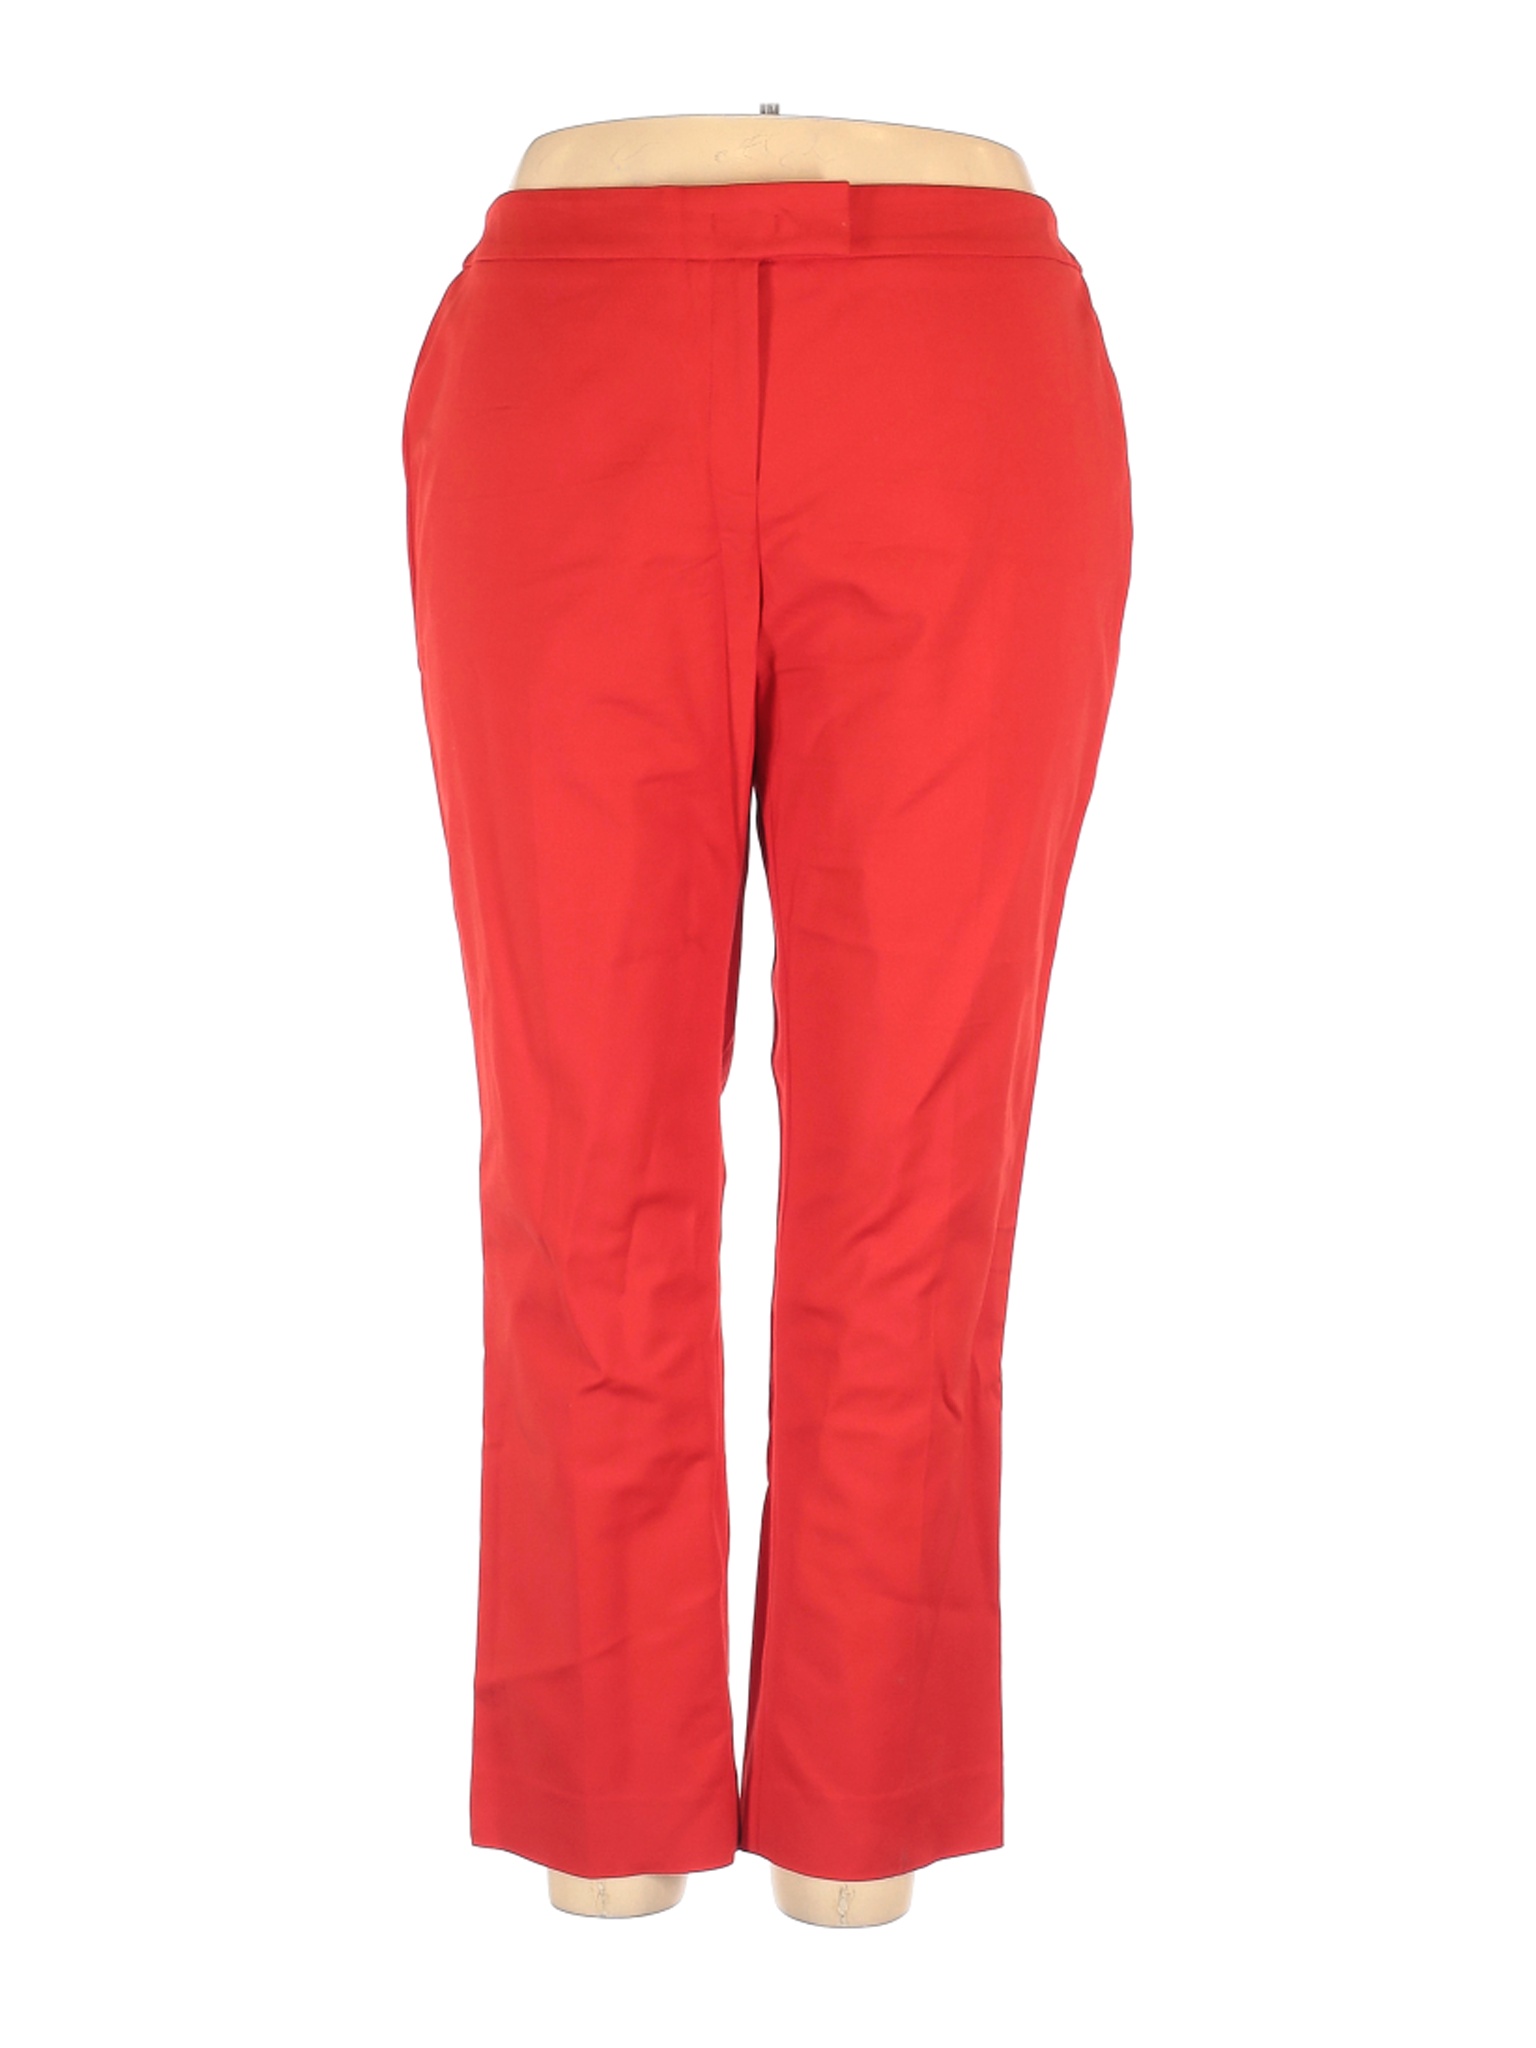 Anne Klein Women Red Dress Pants 18 Plus | eBay